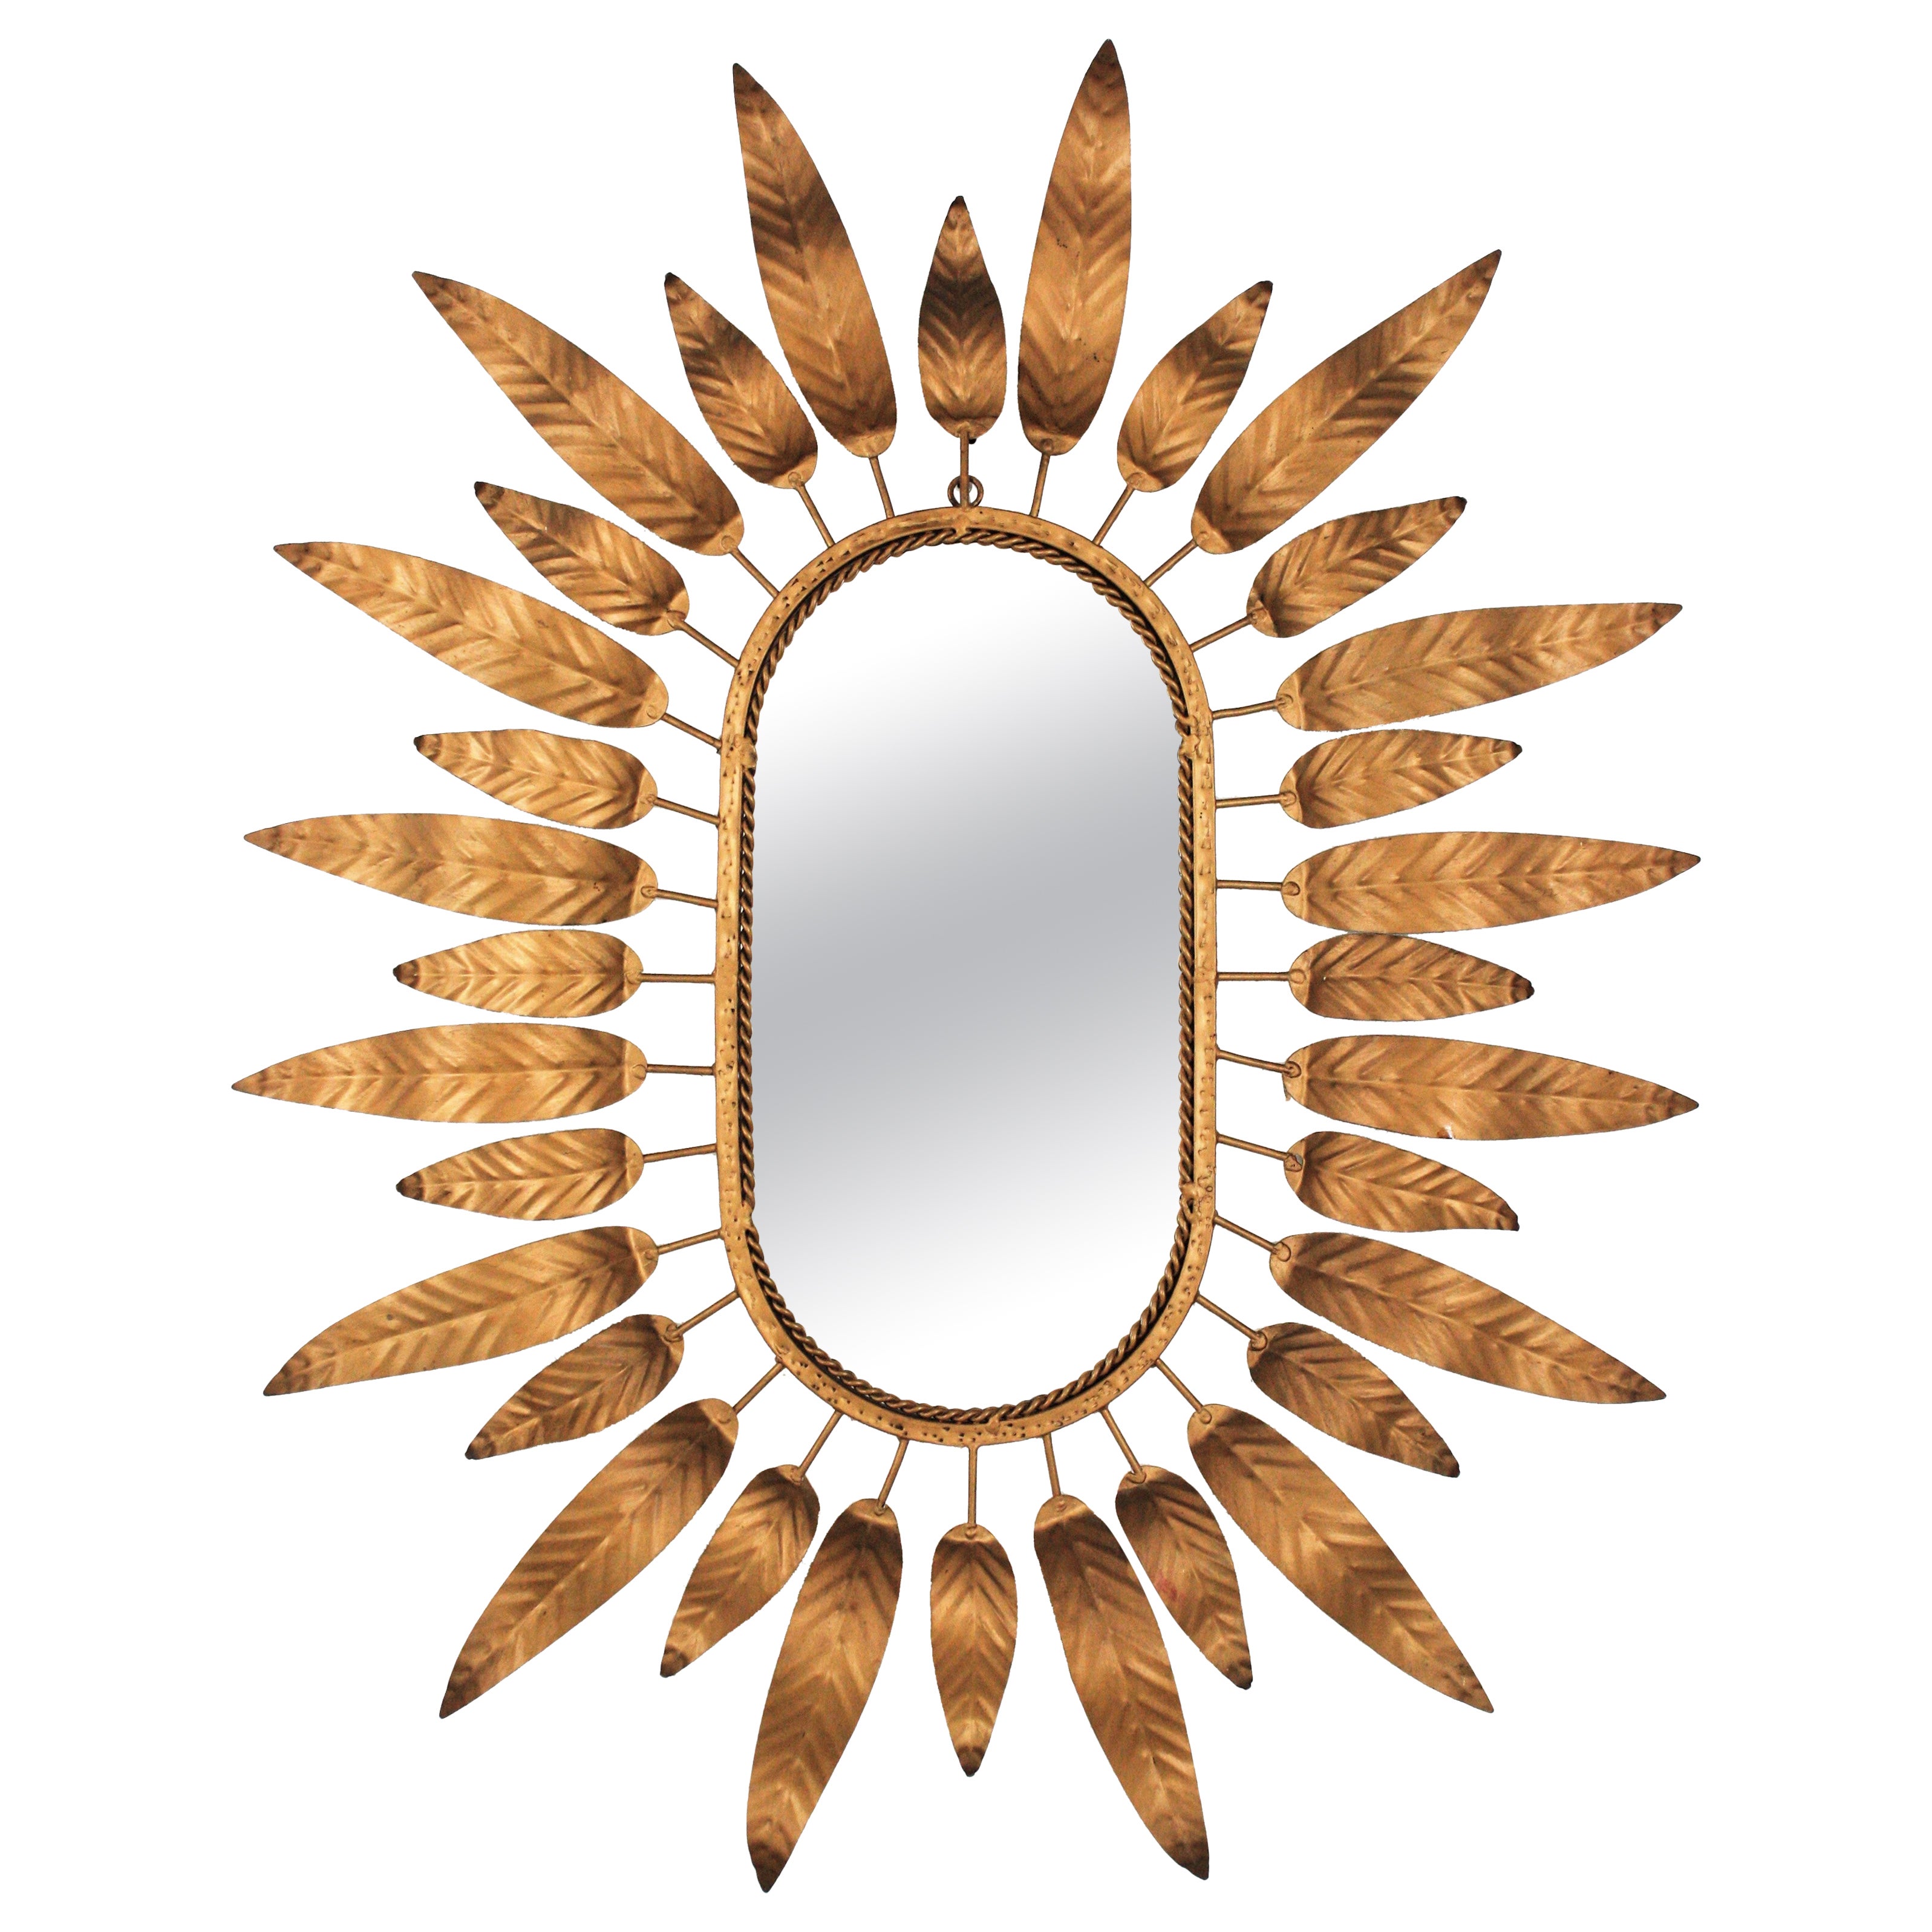 Sunburst Oval Mirror in Gilt Metal with Foliage Frame